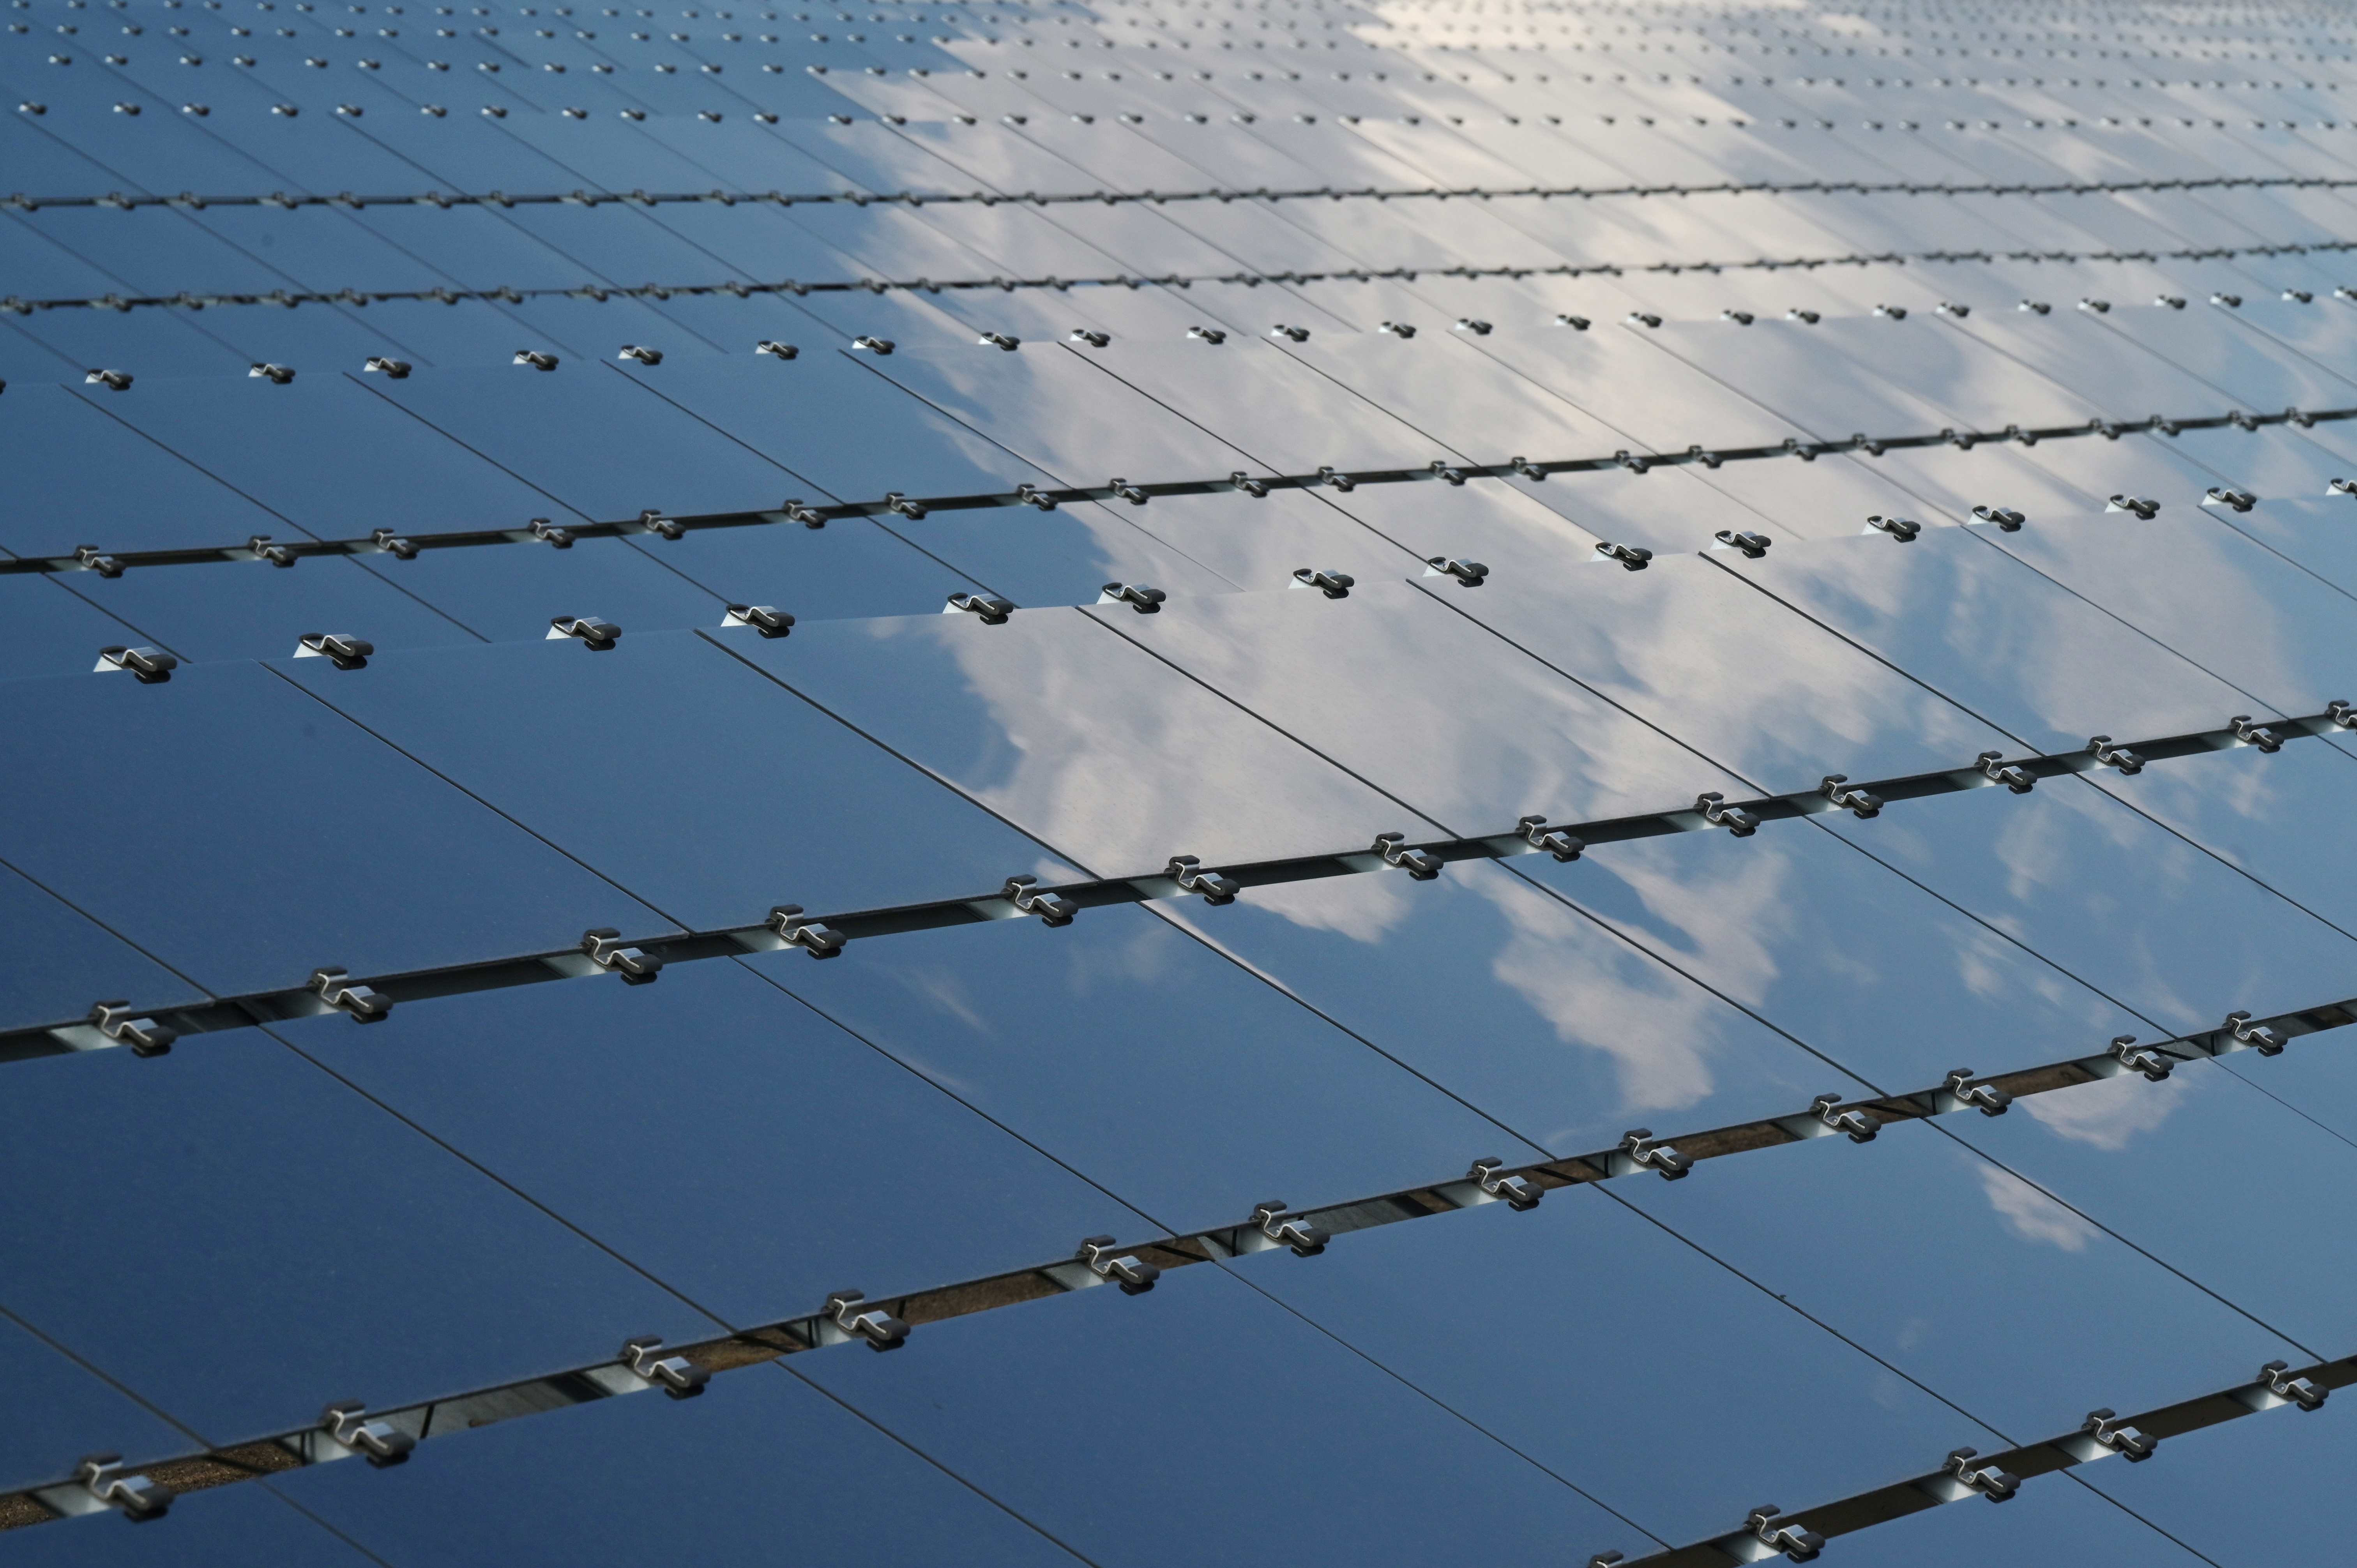 Solar panels are seen at the Desert Stateline project near Nipton